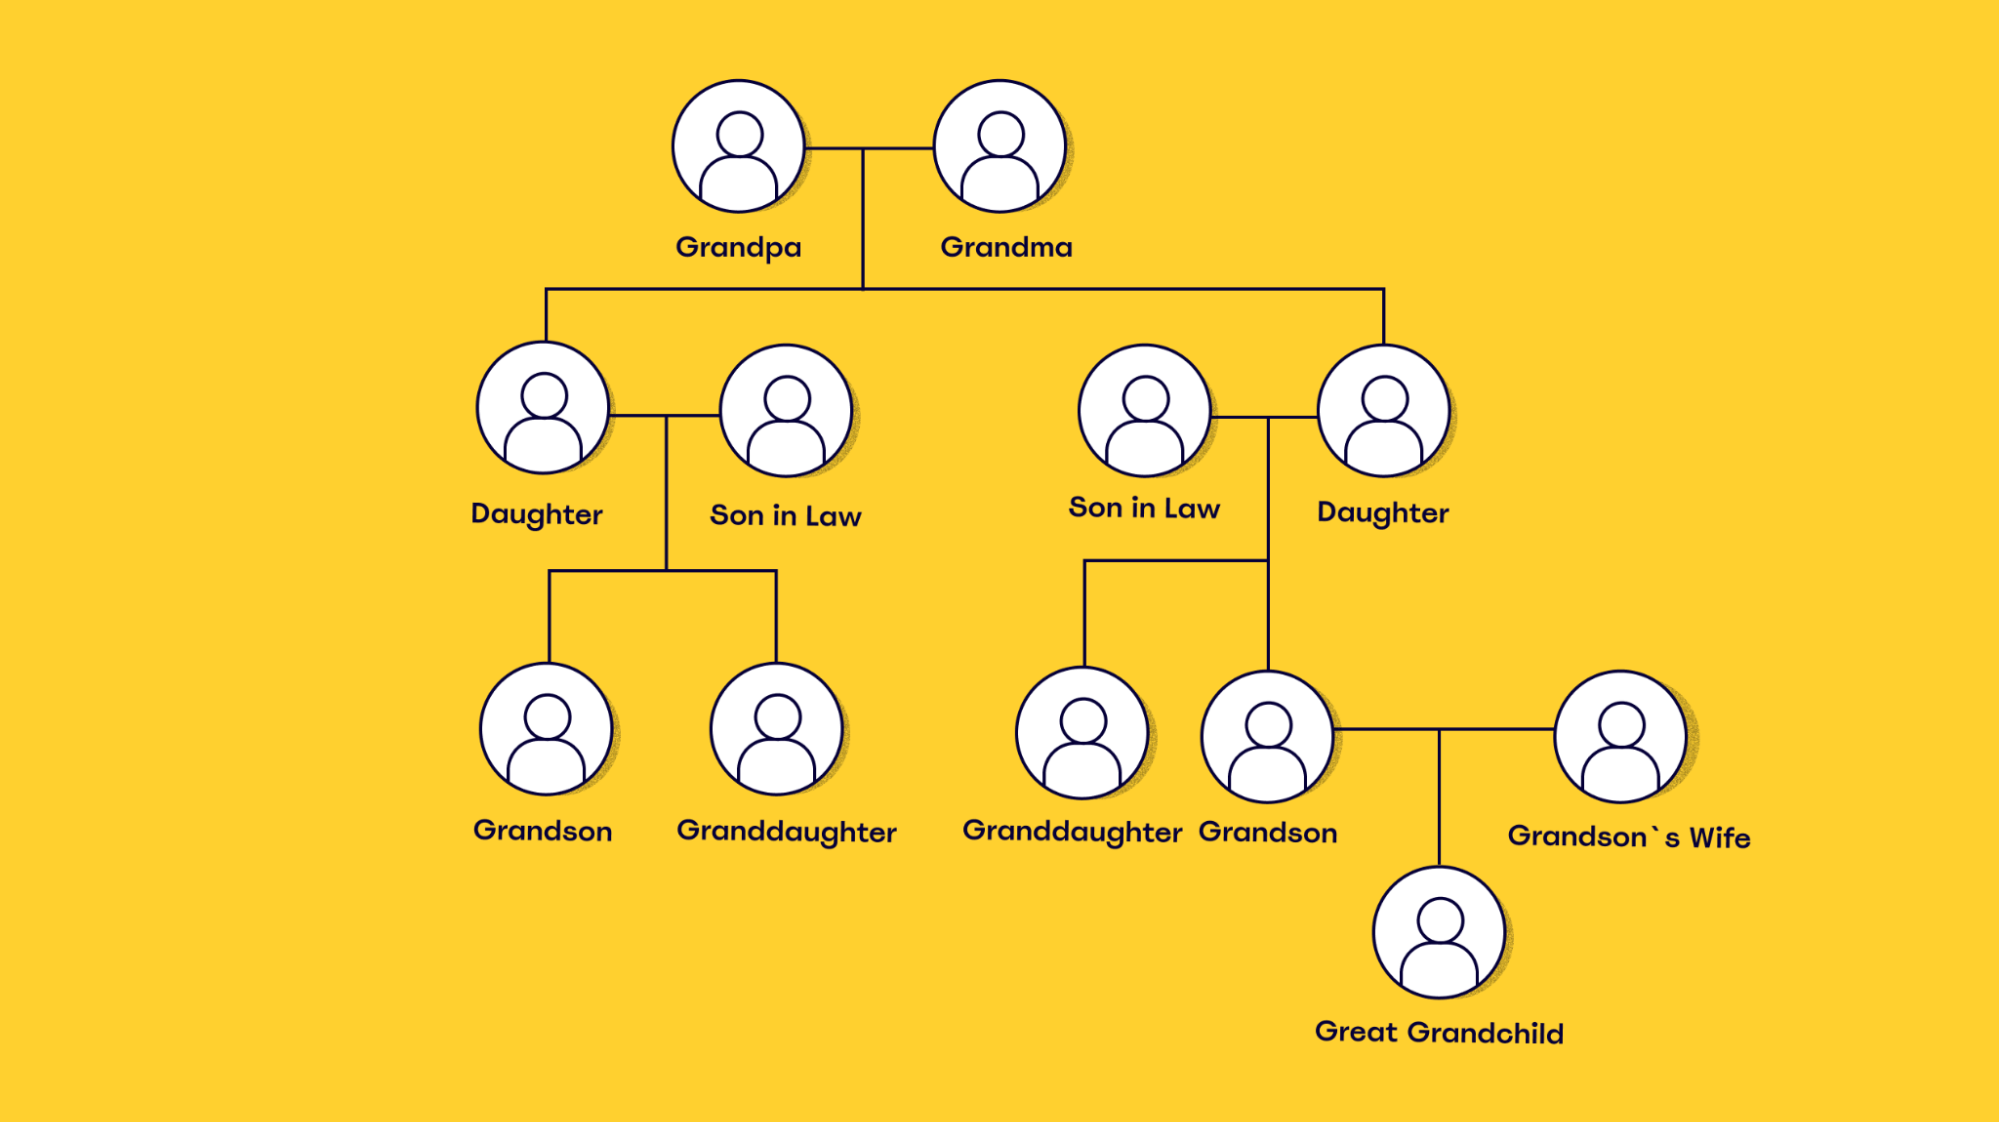 A basic family tree diagram